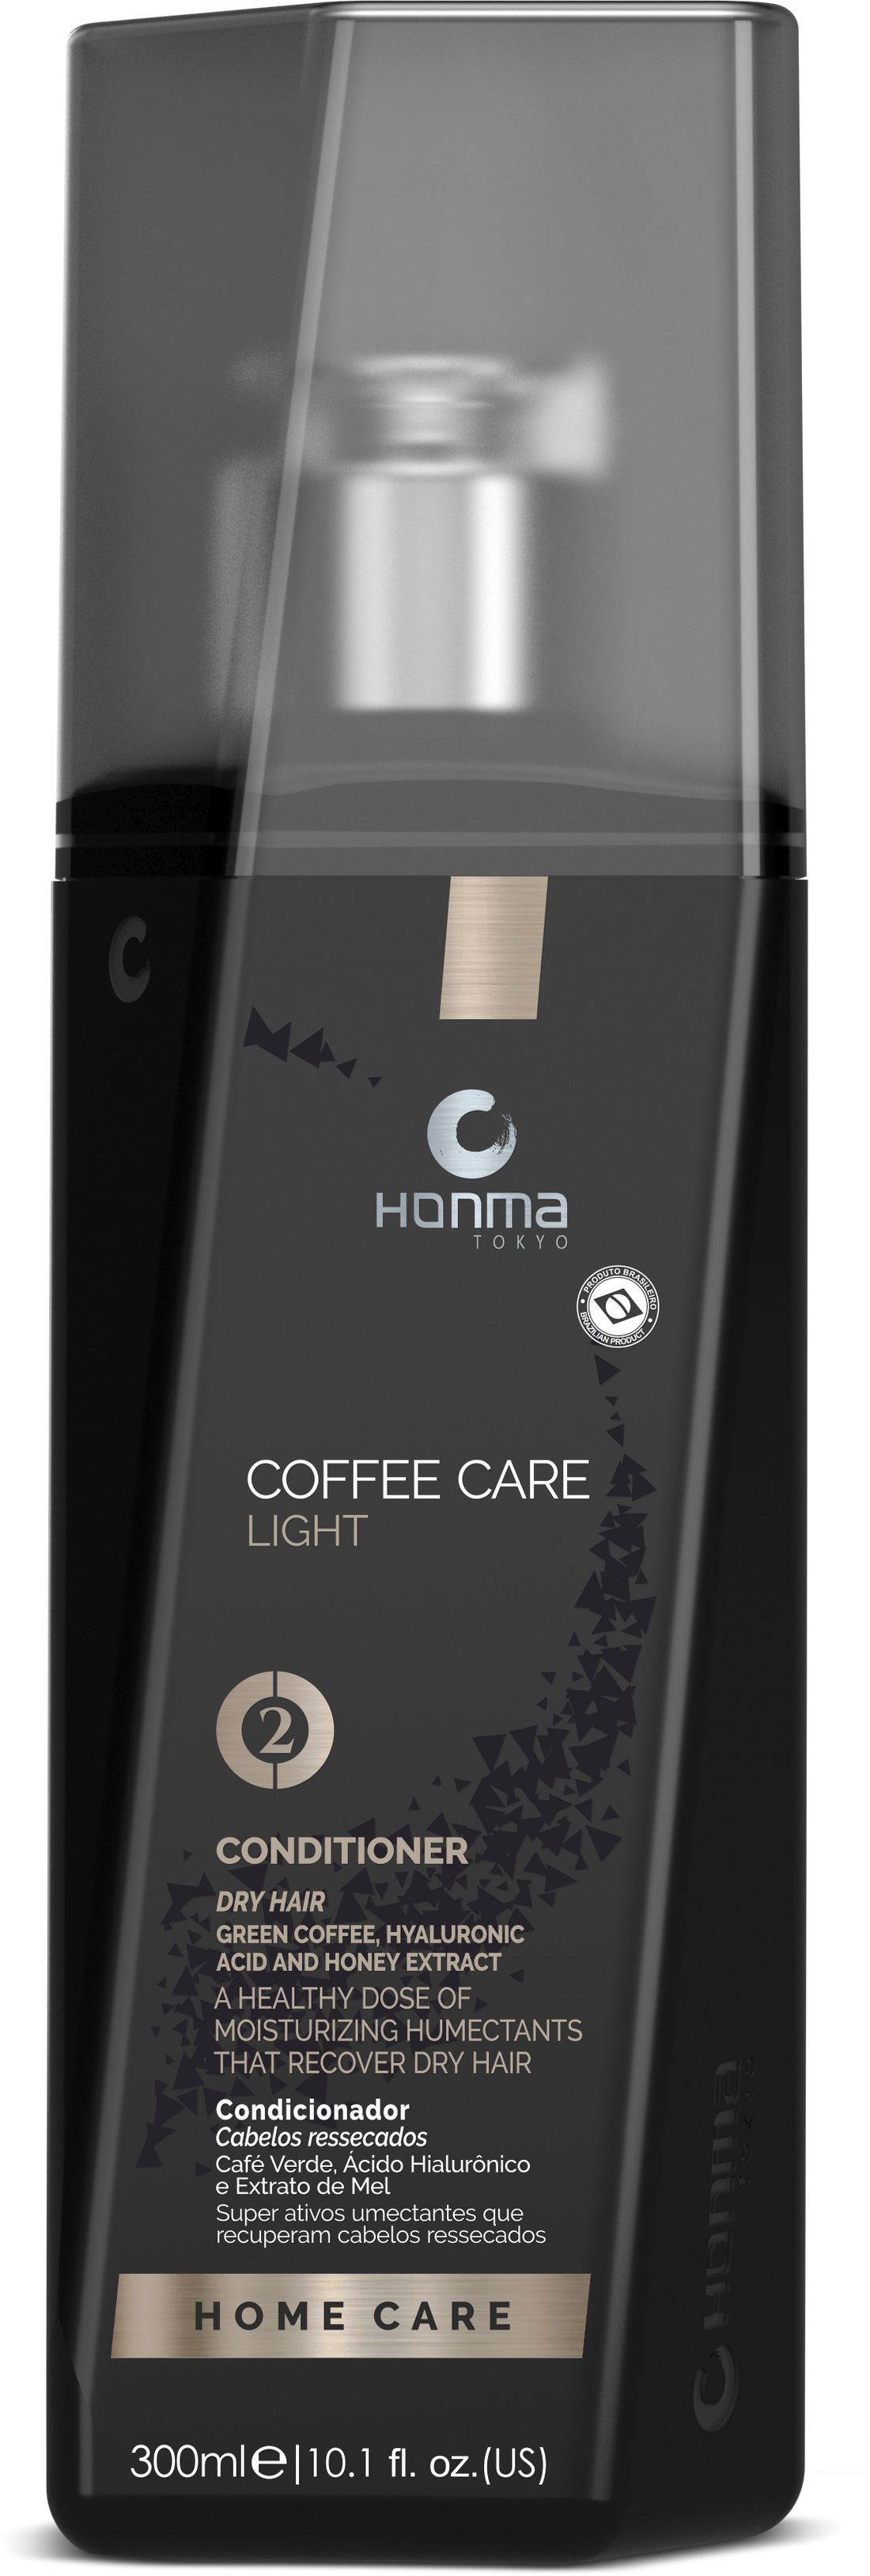 COFFEE CARE LIGHT CONDITIONER - HOME CARE